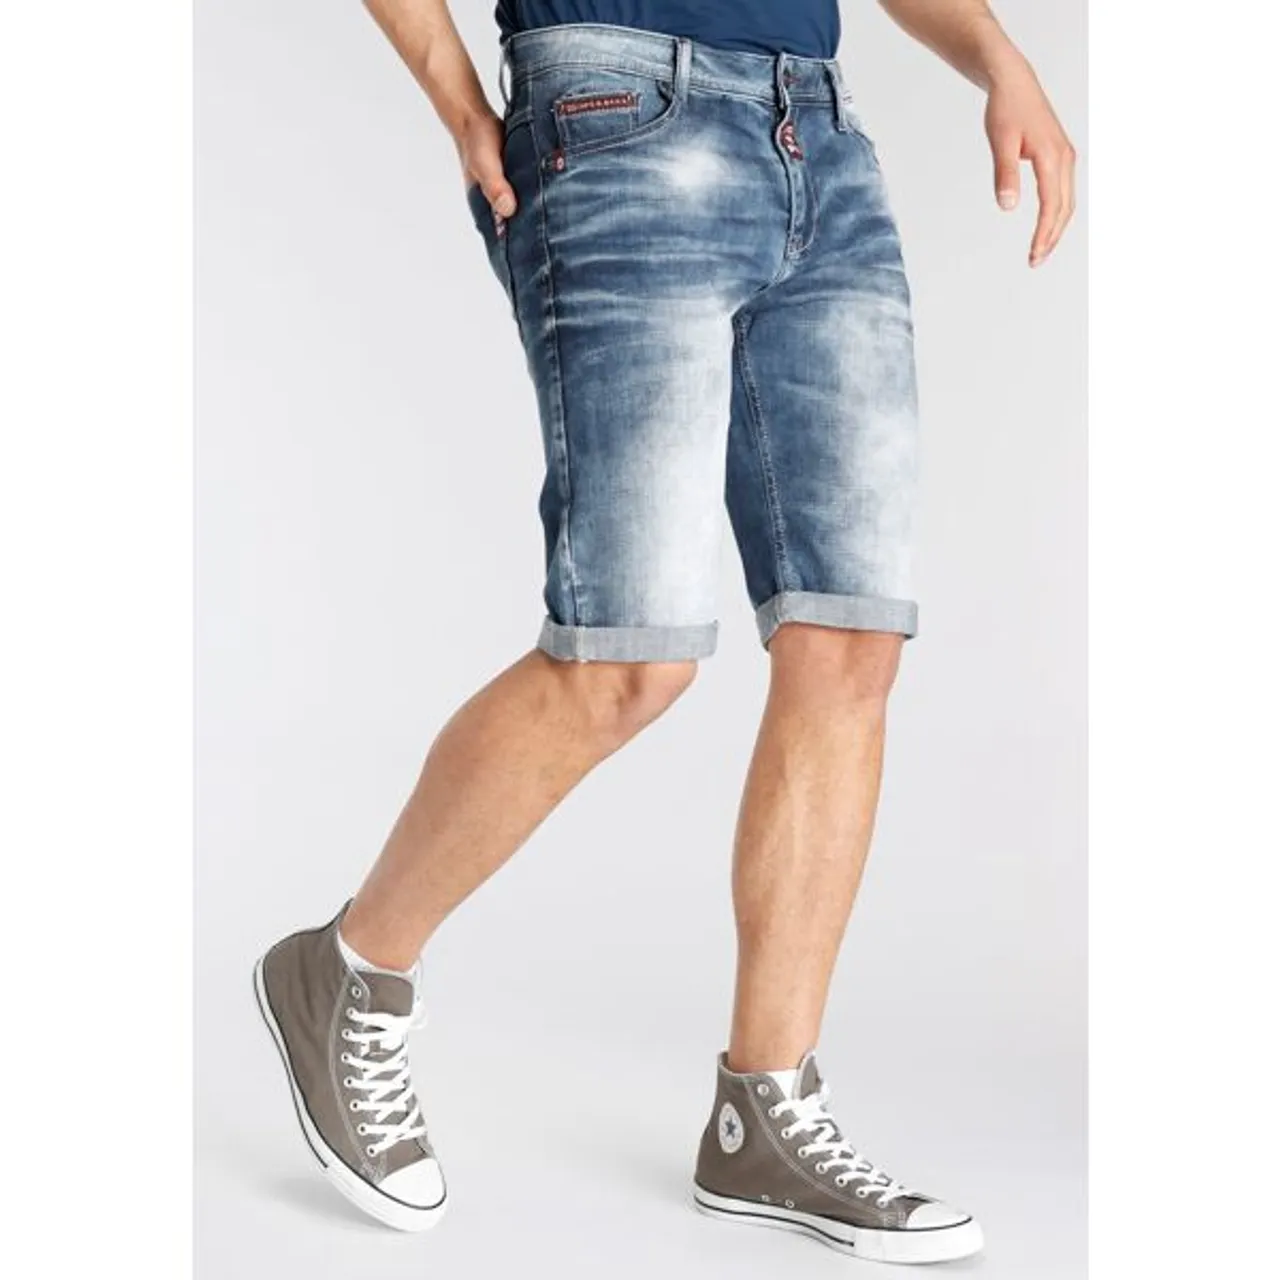 Jeansshorts CIPO & BAXX Gr. 30, N-Gr, blau (blue used) Herren Jeans Shorts